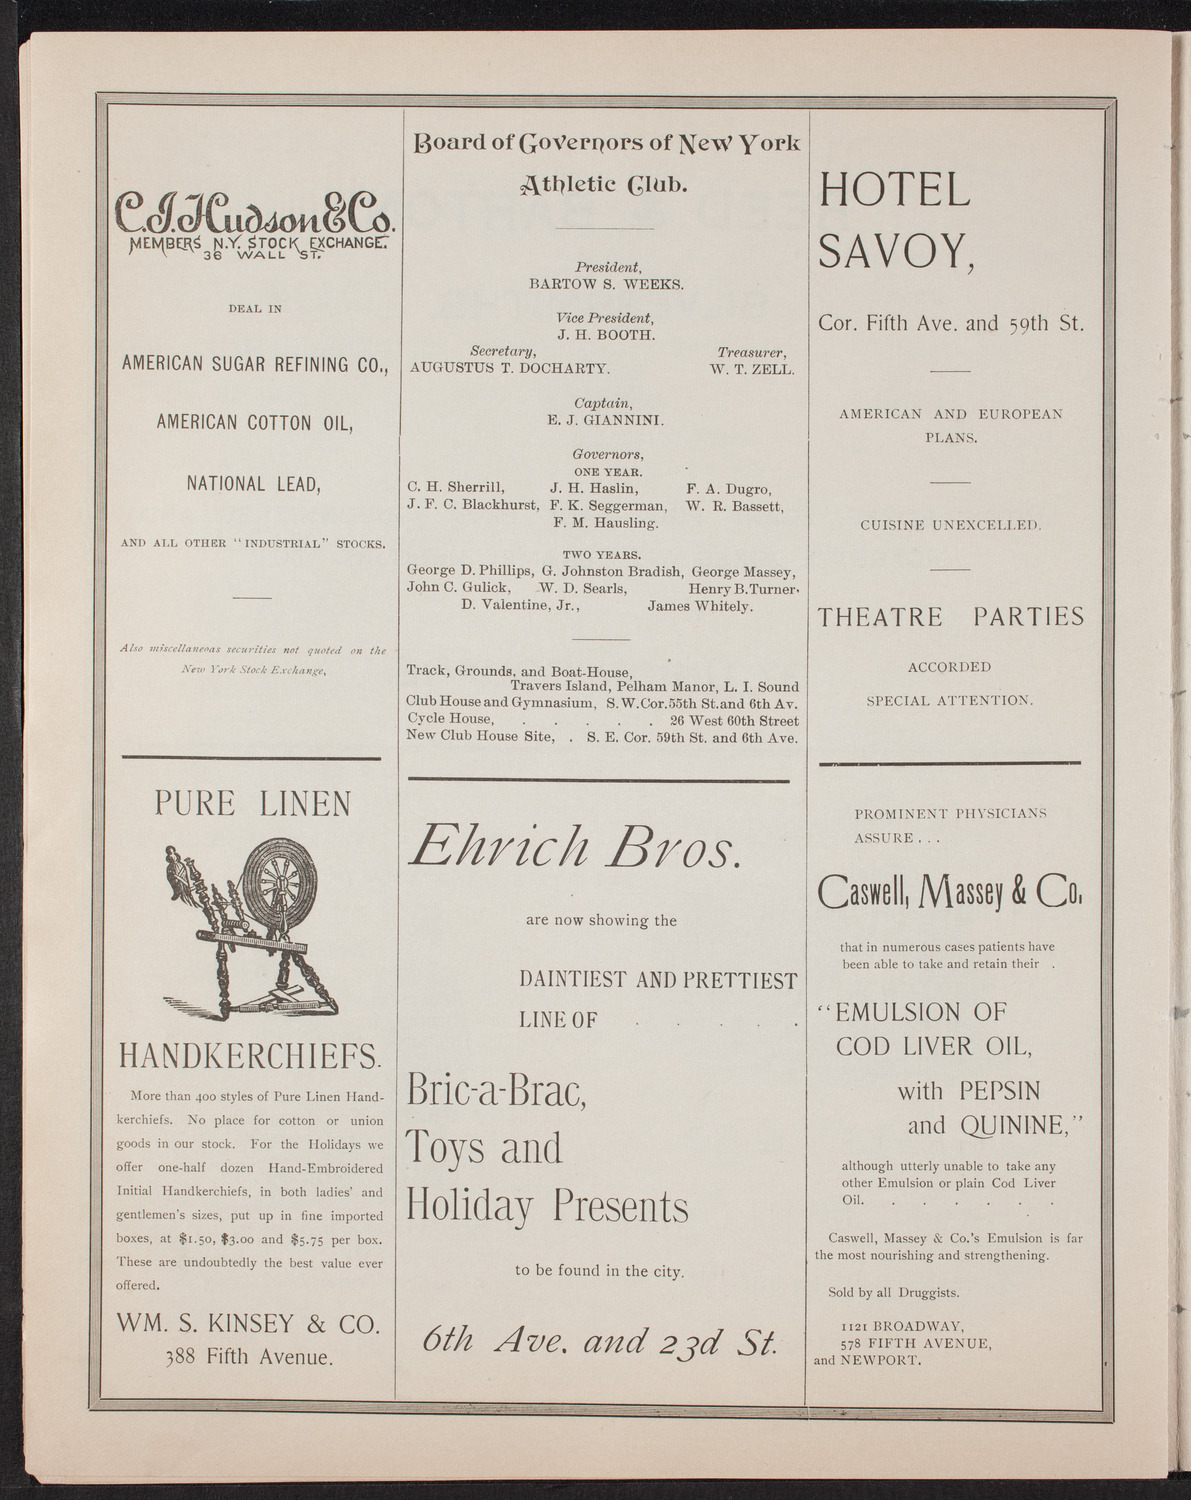 New York Athletic Club Minstrel Show, November 30, 1892, program page 12